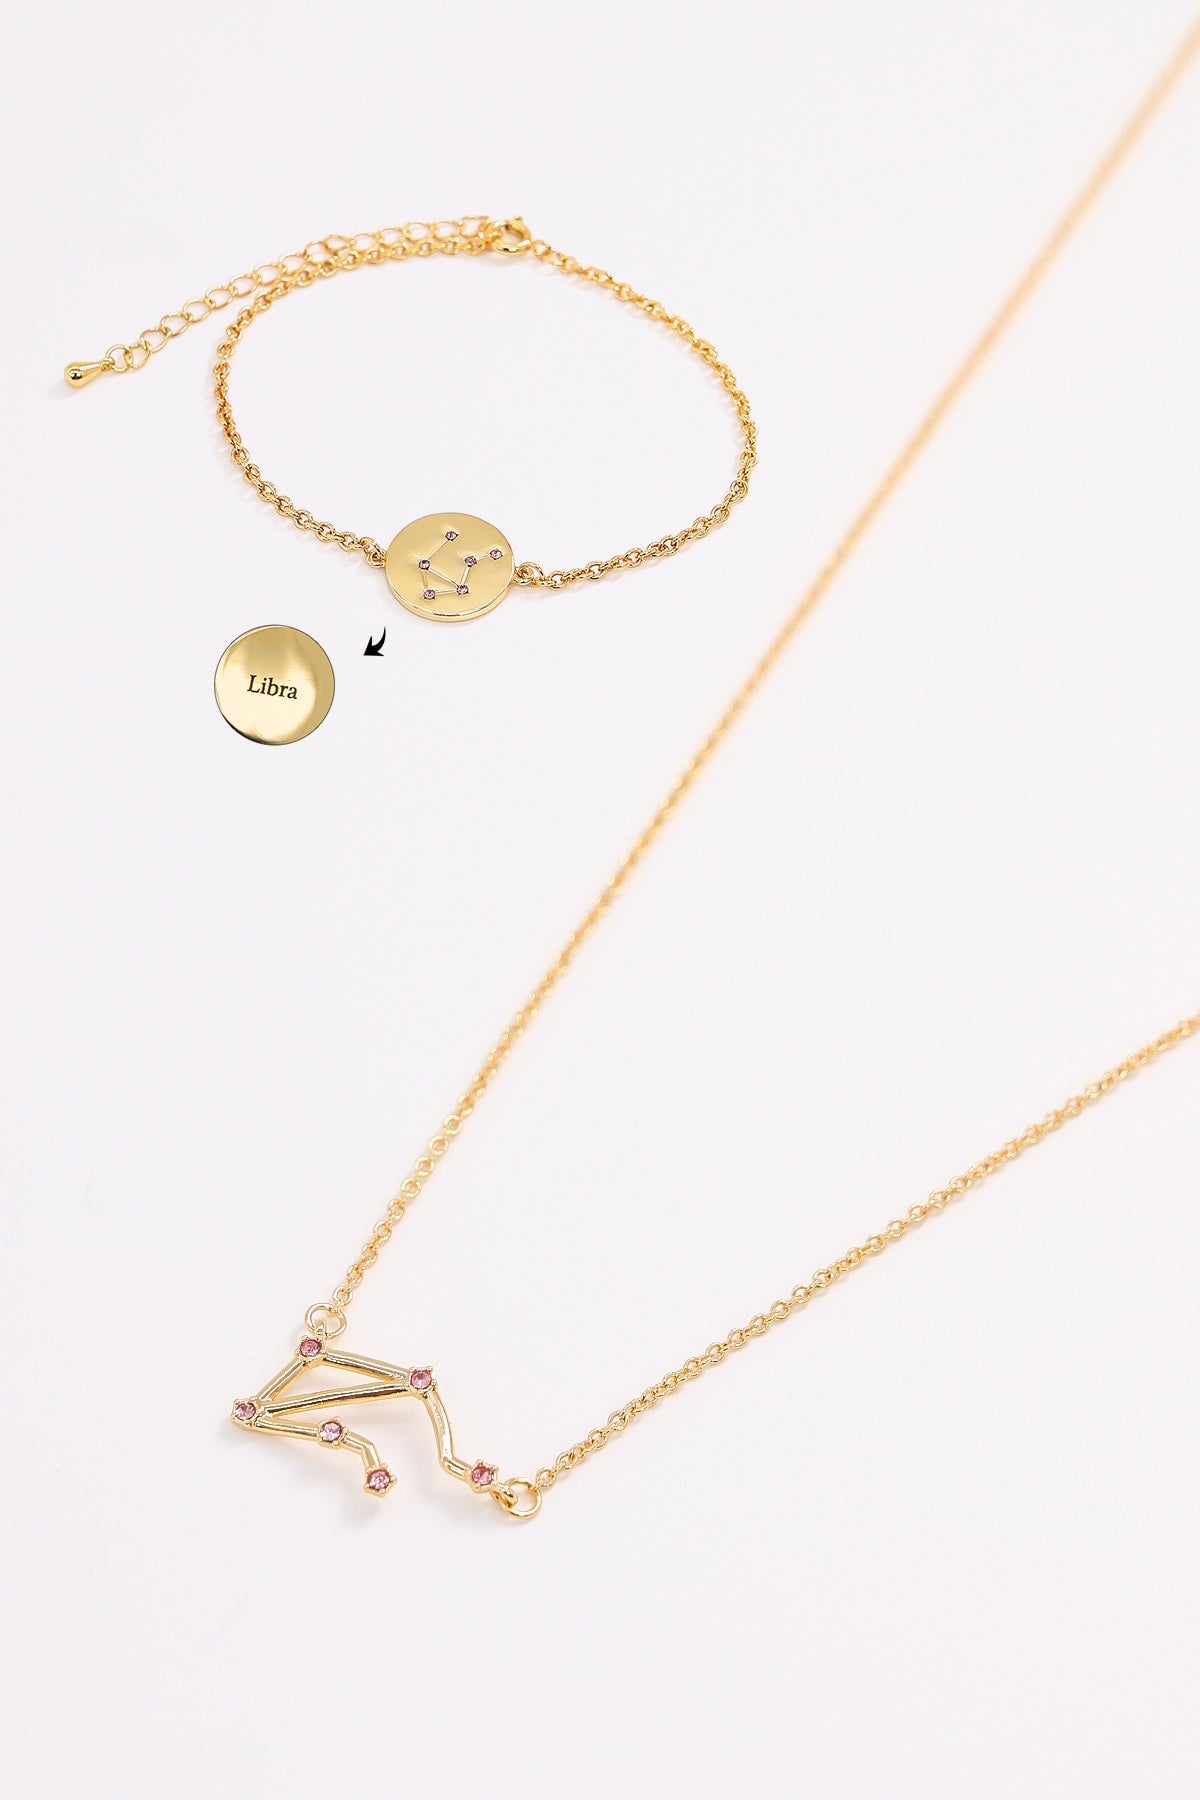 Libra Constellation Necklace Sky Blue – Carla De La Cruz Jewelry